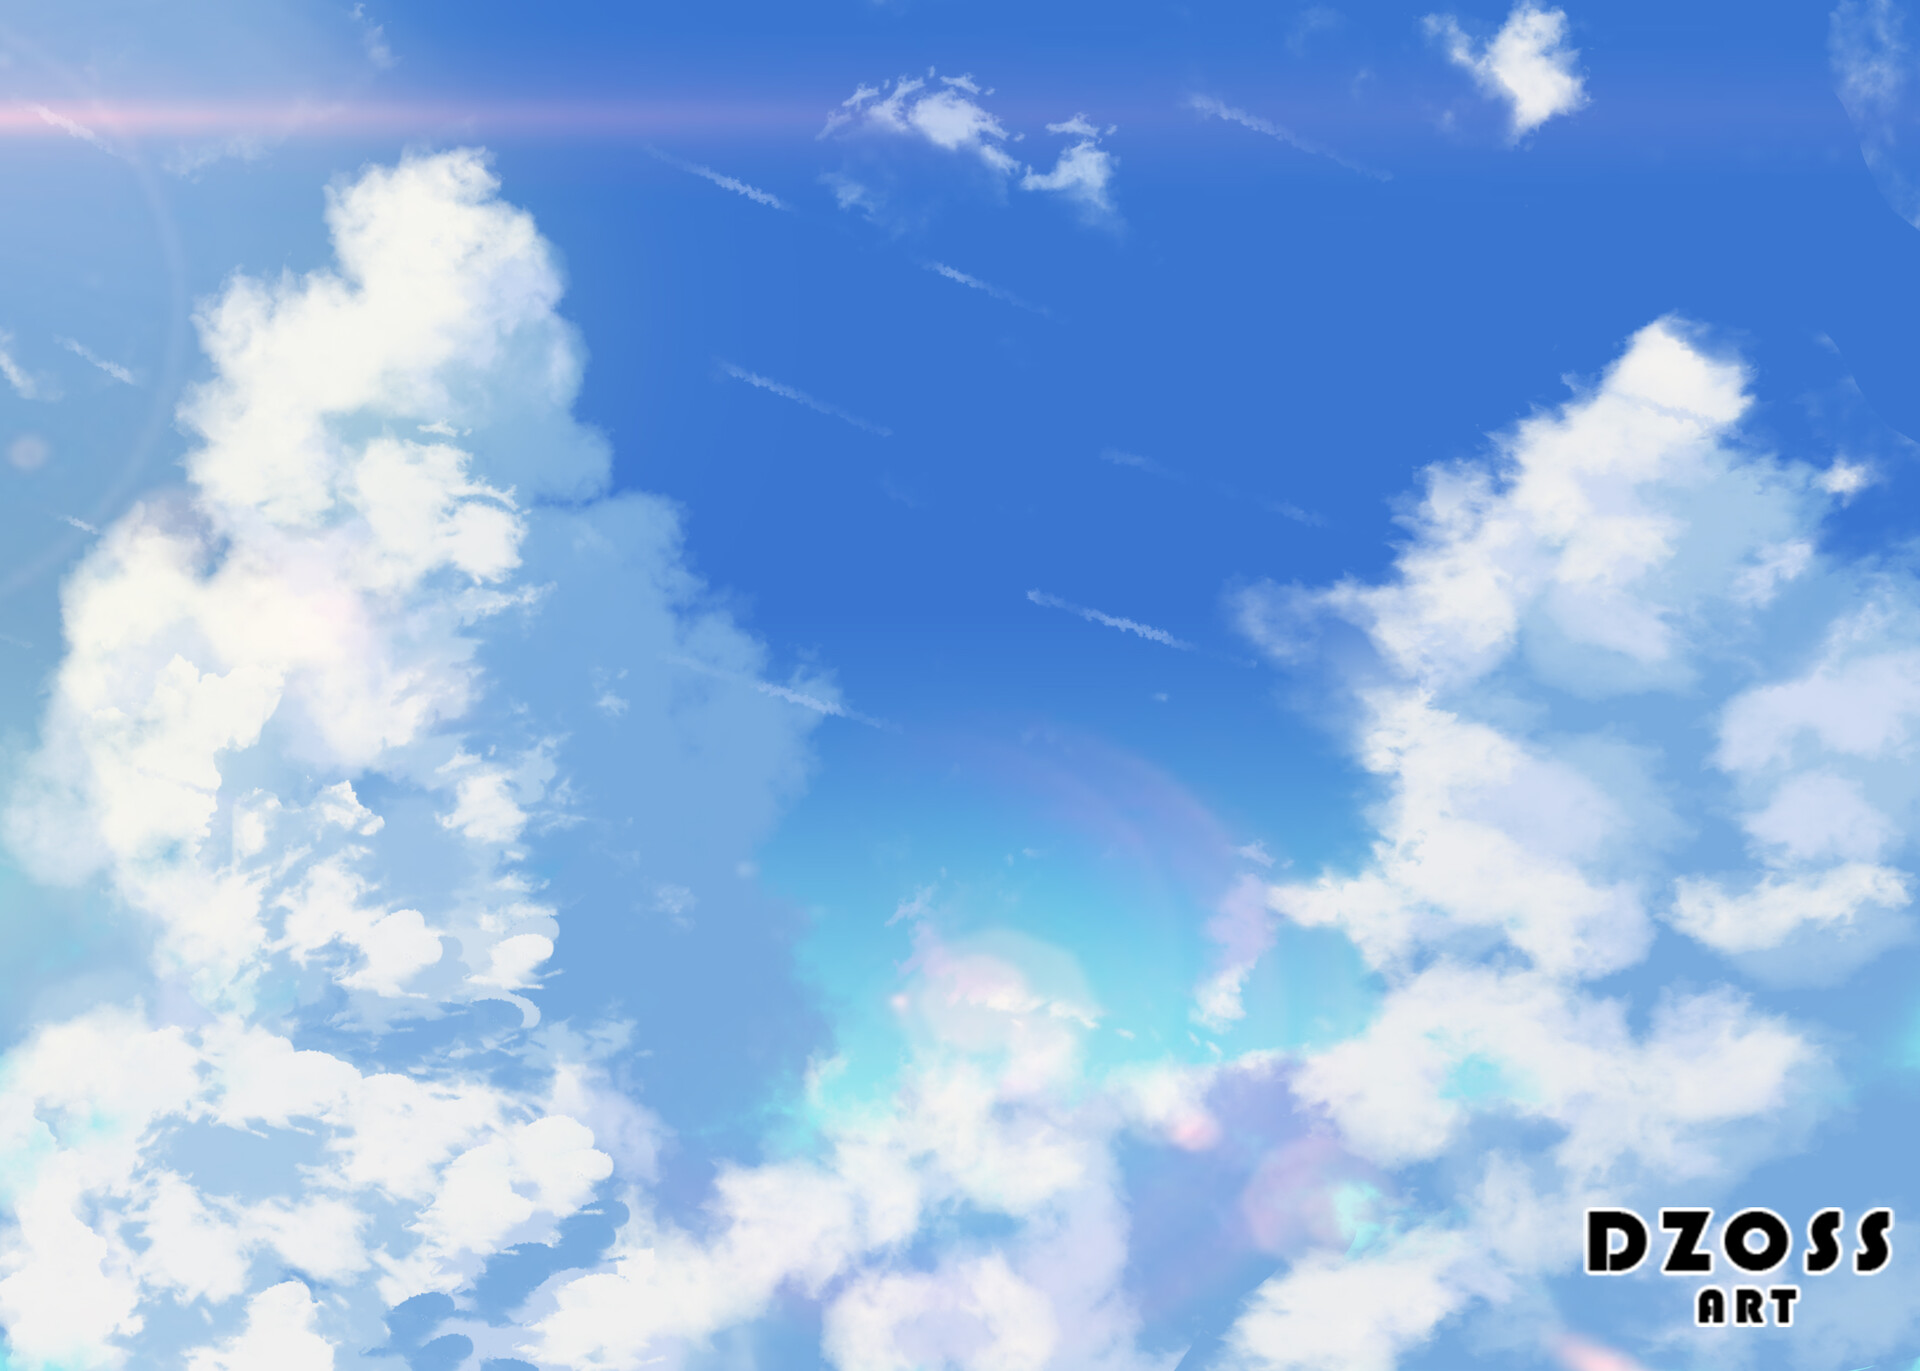 Anime Cloud